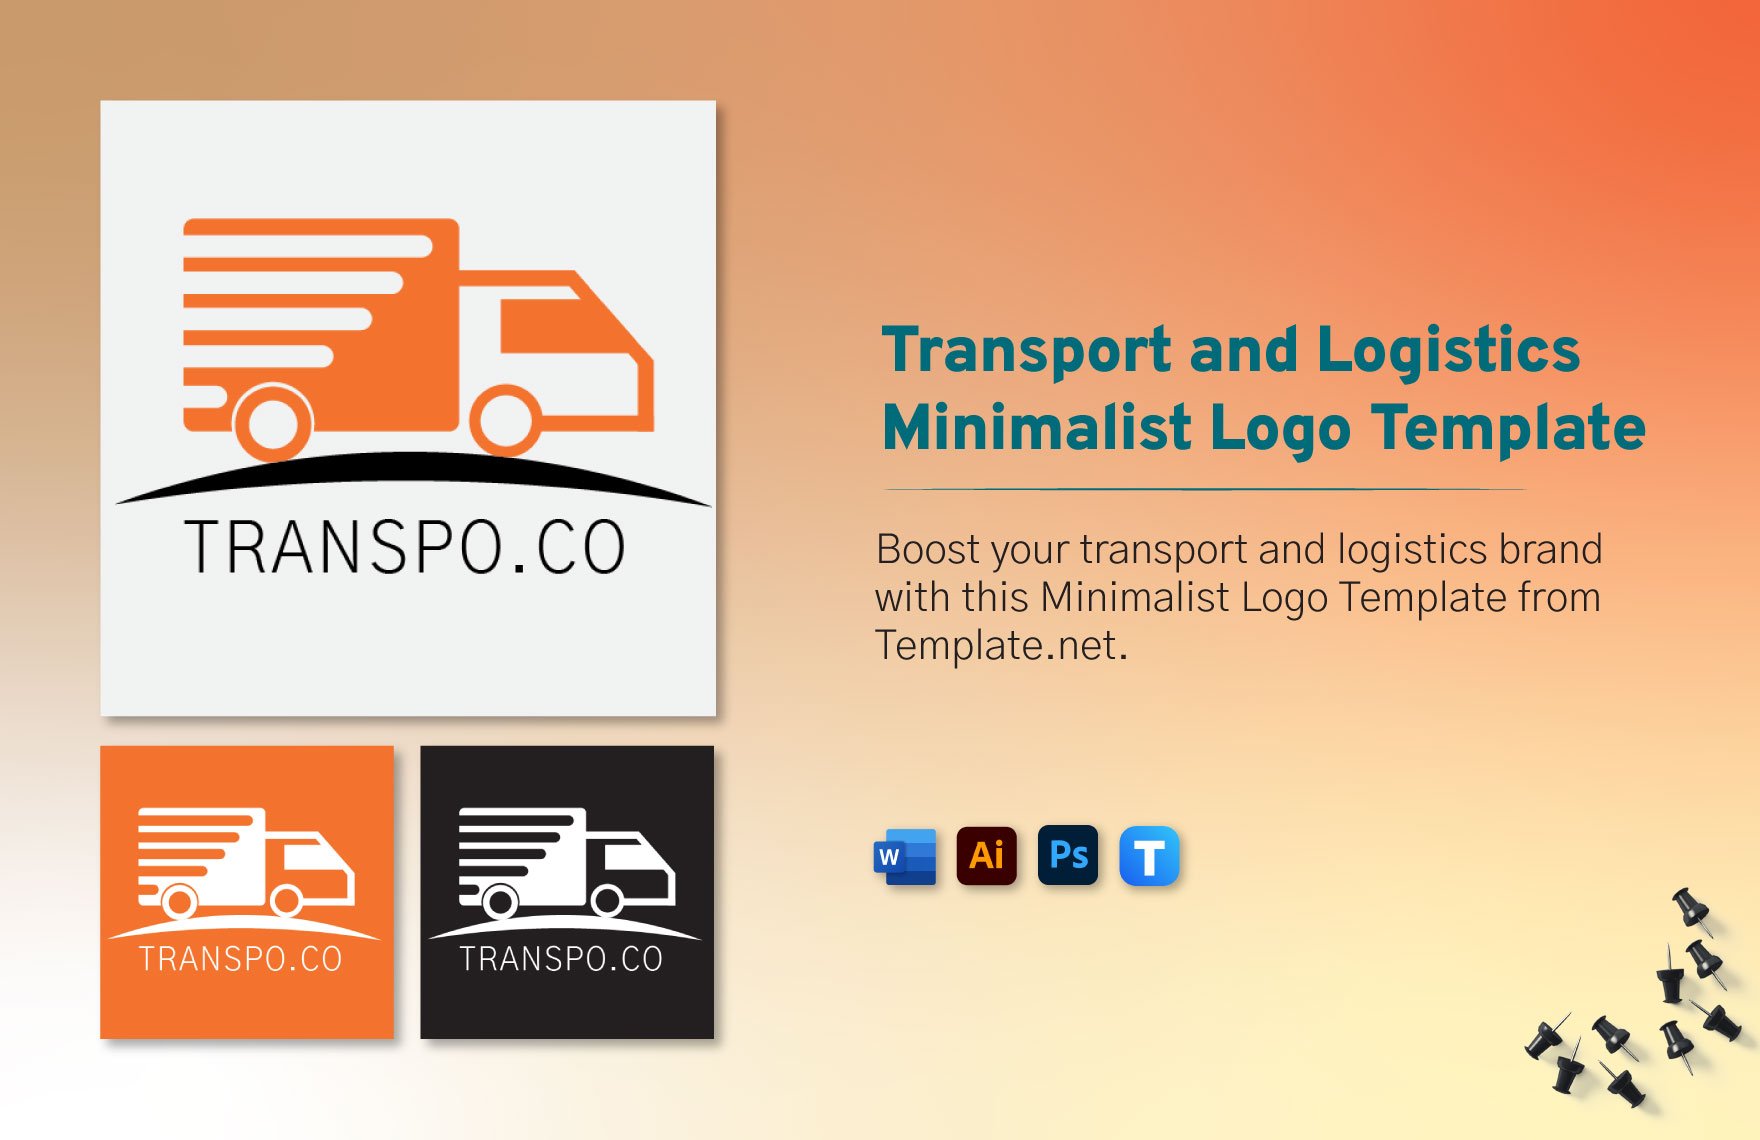 Transport and Logistics Minimalist Logo Template in Word, Illustrator, PSD